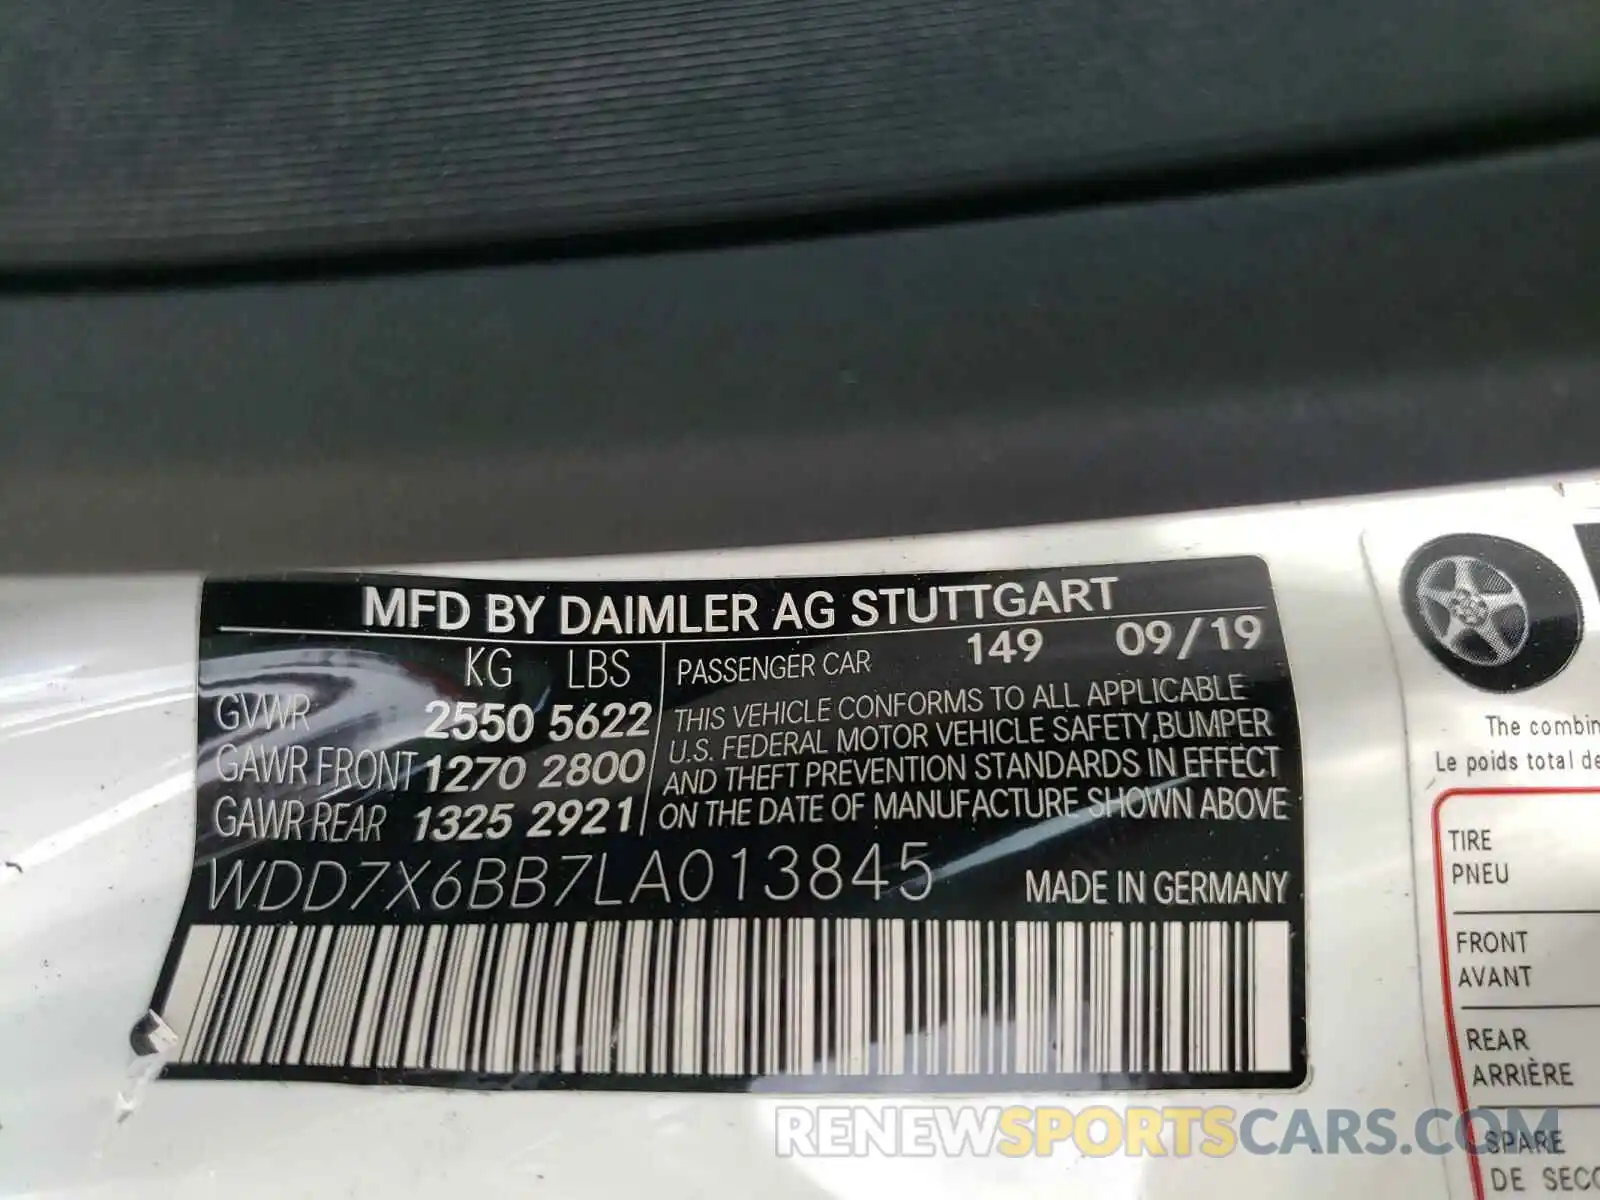 10 Photograph of a damaged car WDD7X6BB7LA013845 MERCEDES-BENZ AMG 2020